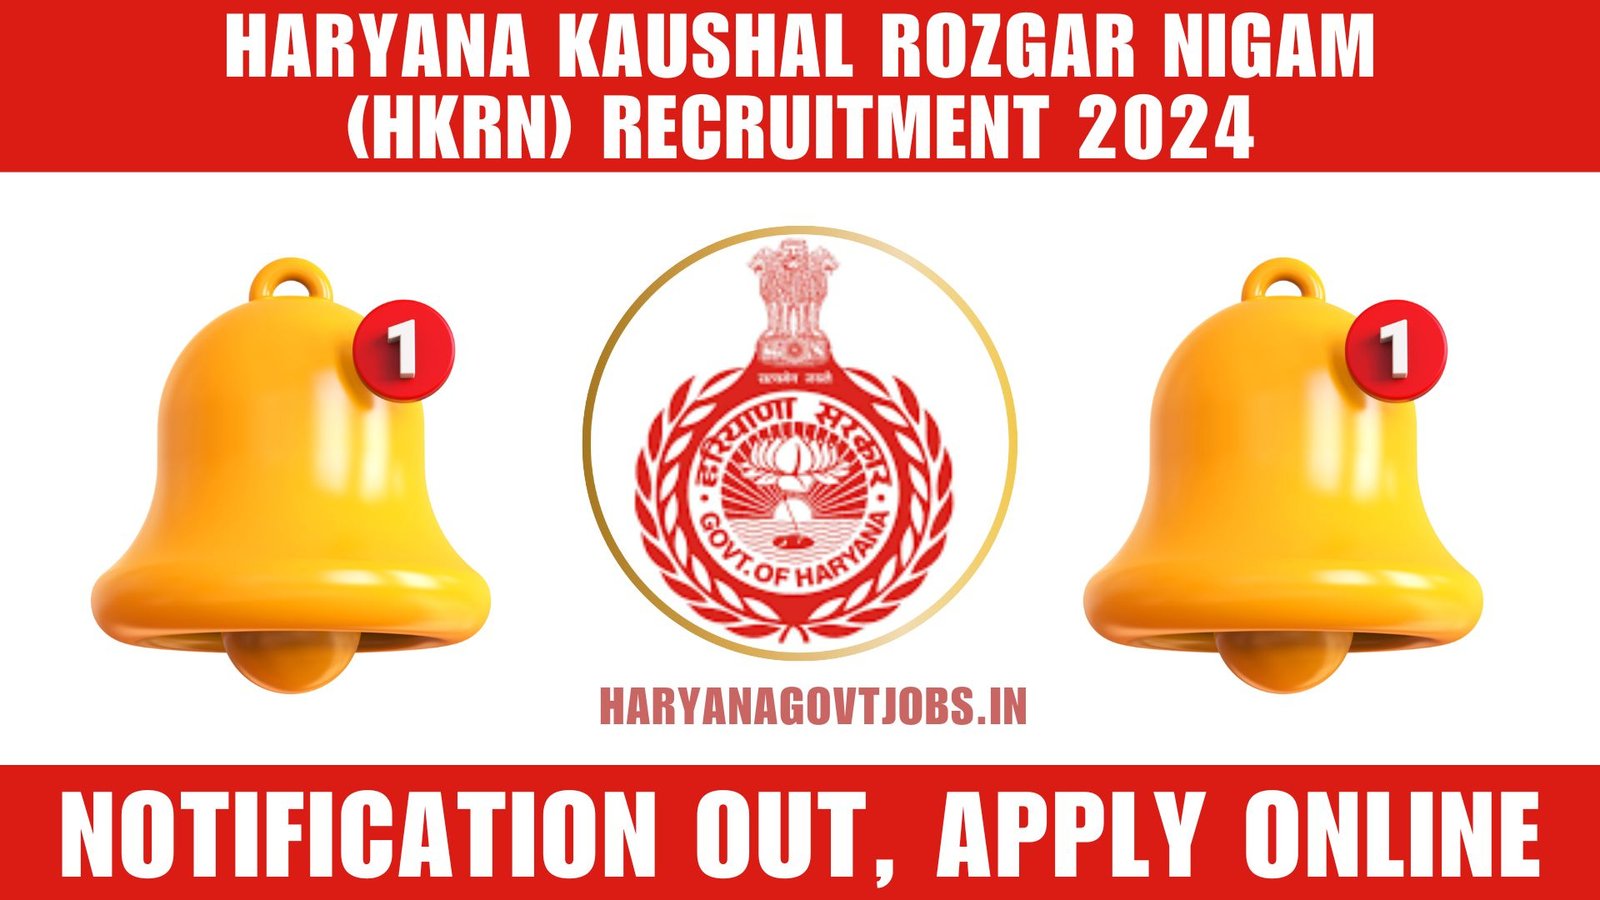 Haryana Kaushal Rozgar Nigam (HKRN) Recruitment 2024 Notification and Apply Online